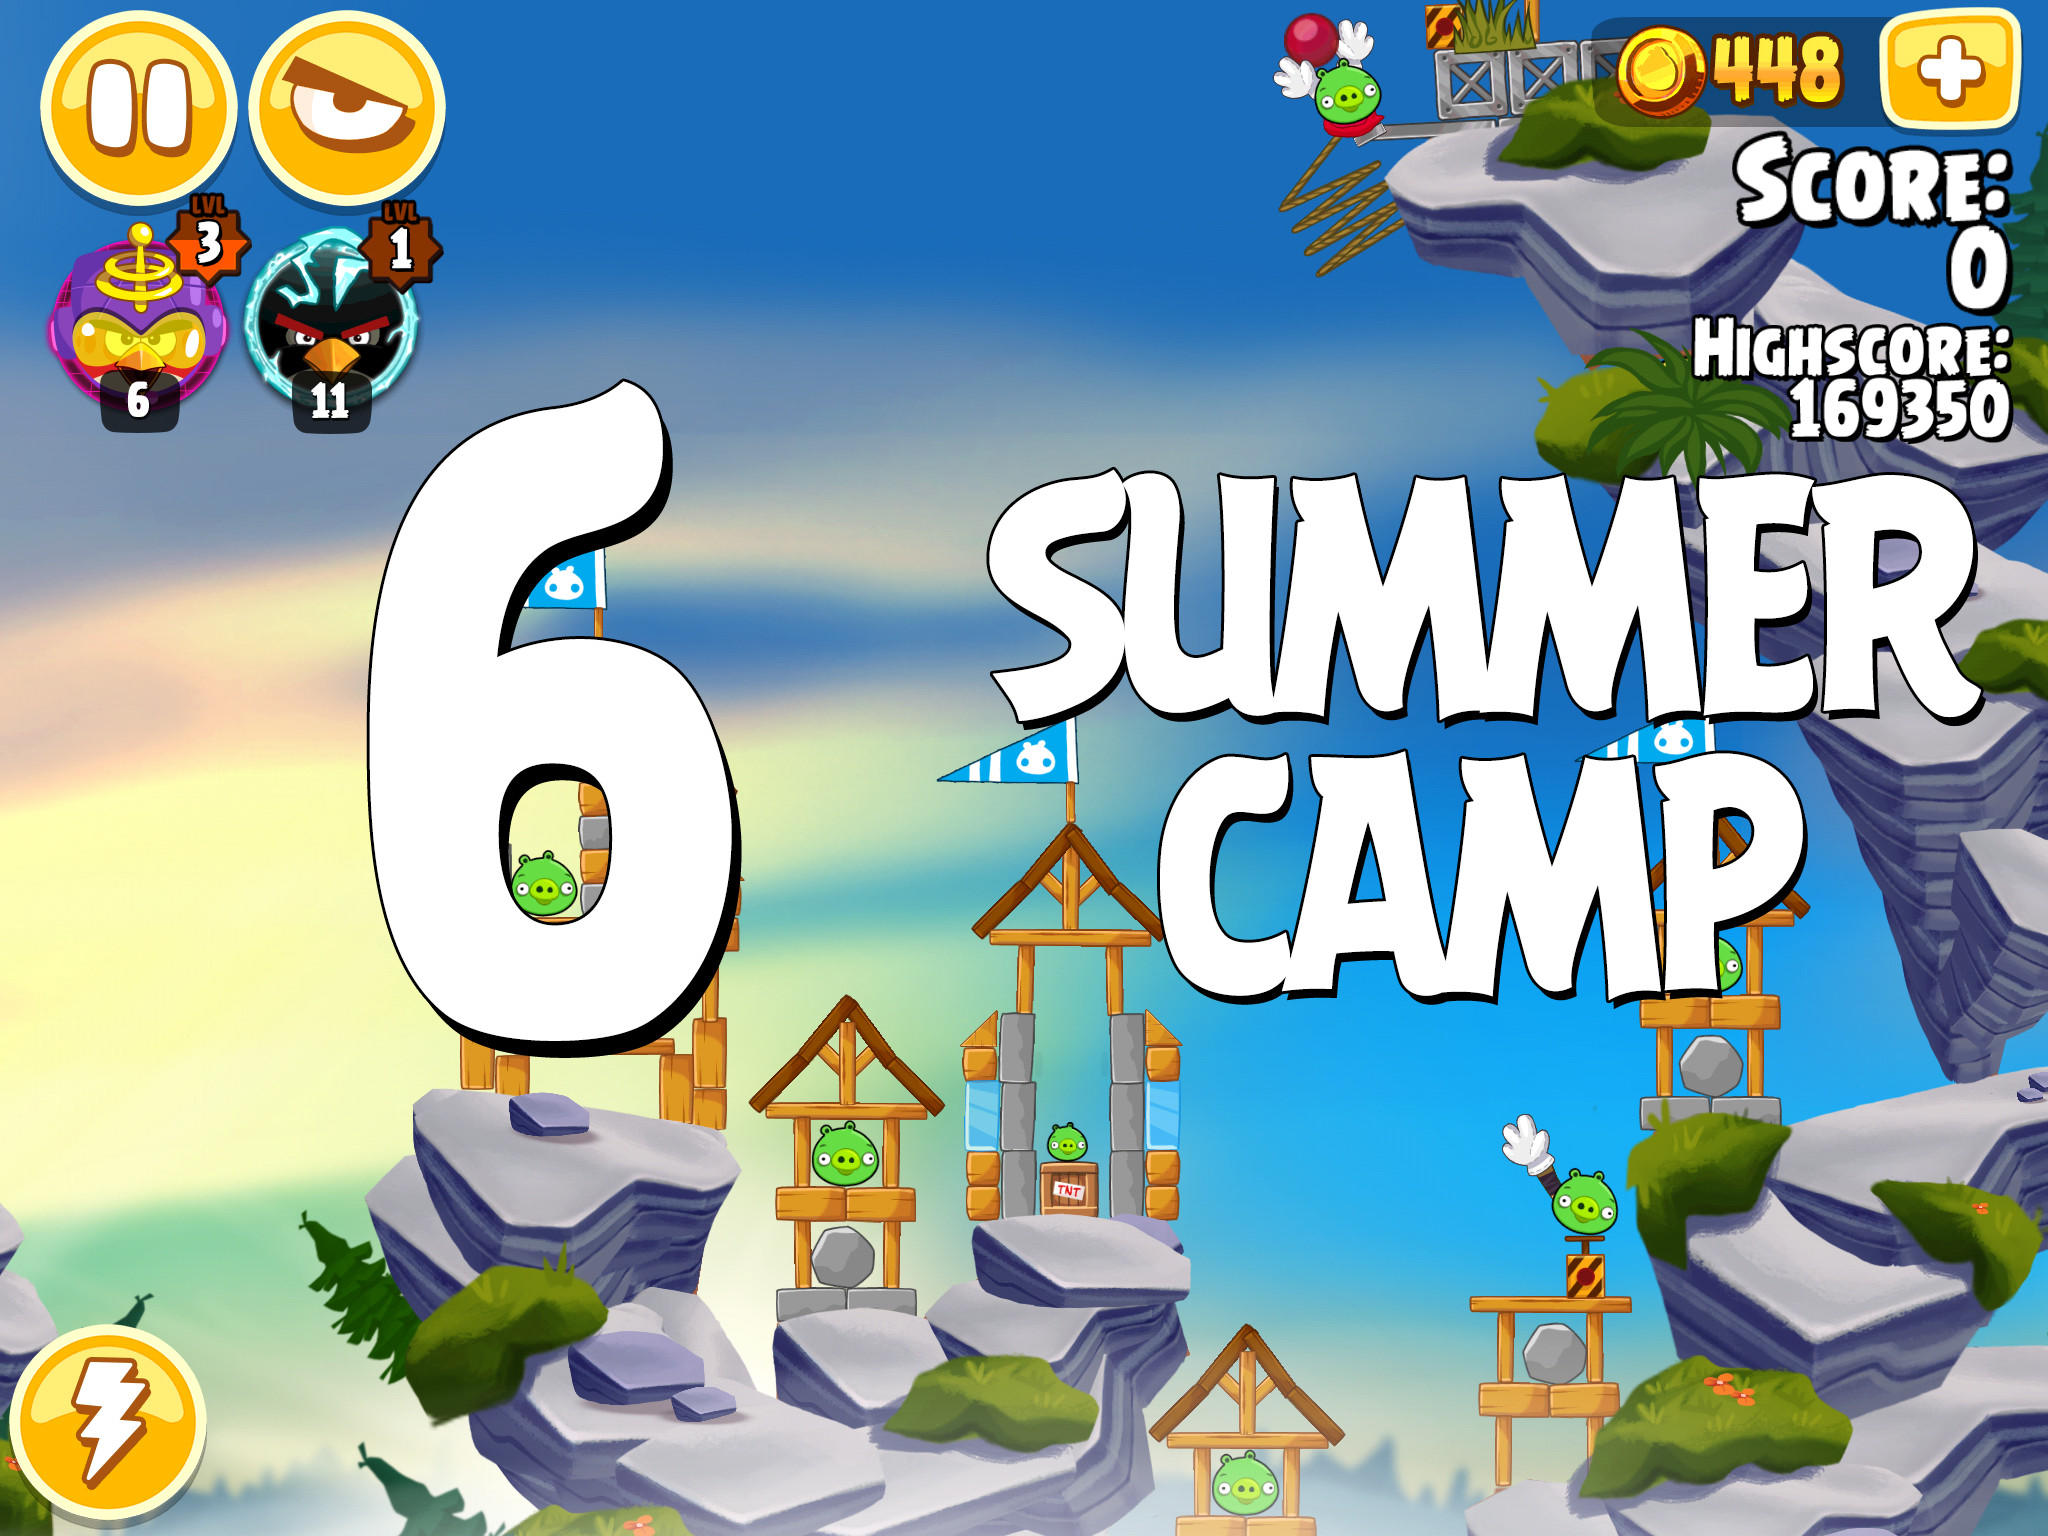 Angry Birds Seasons Summer Camp Level 1-6 Walkthrough